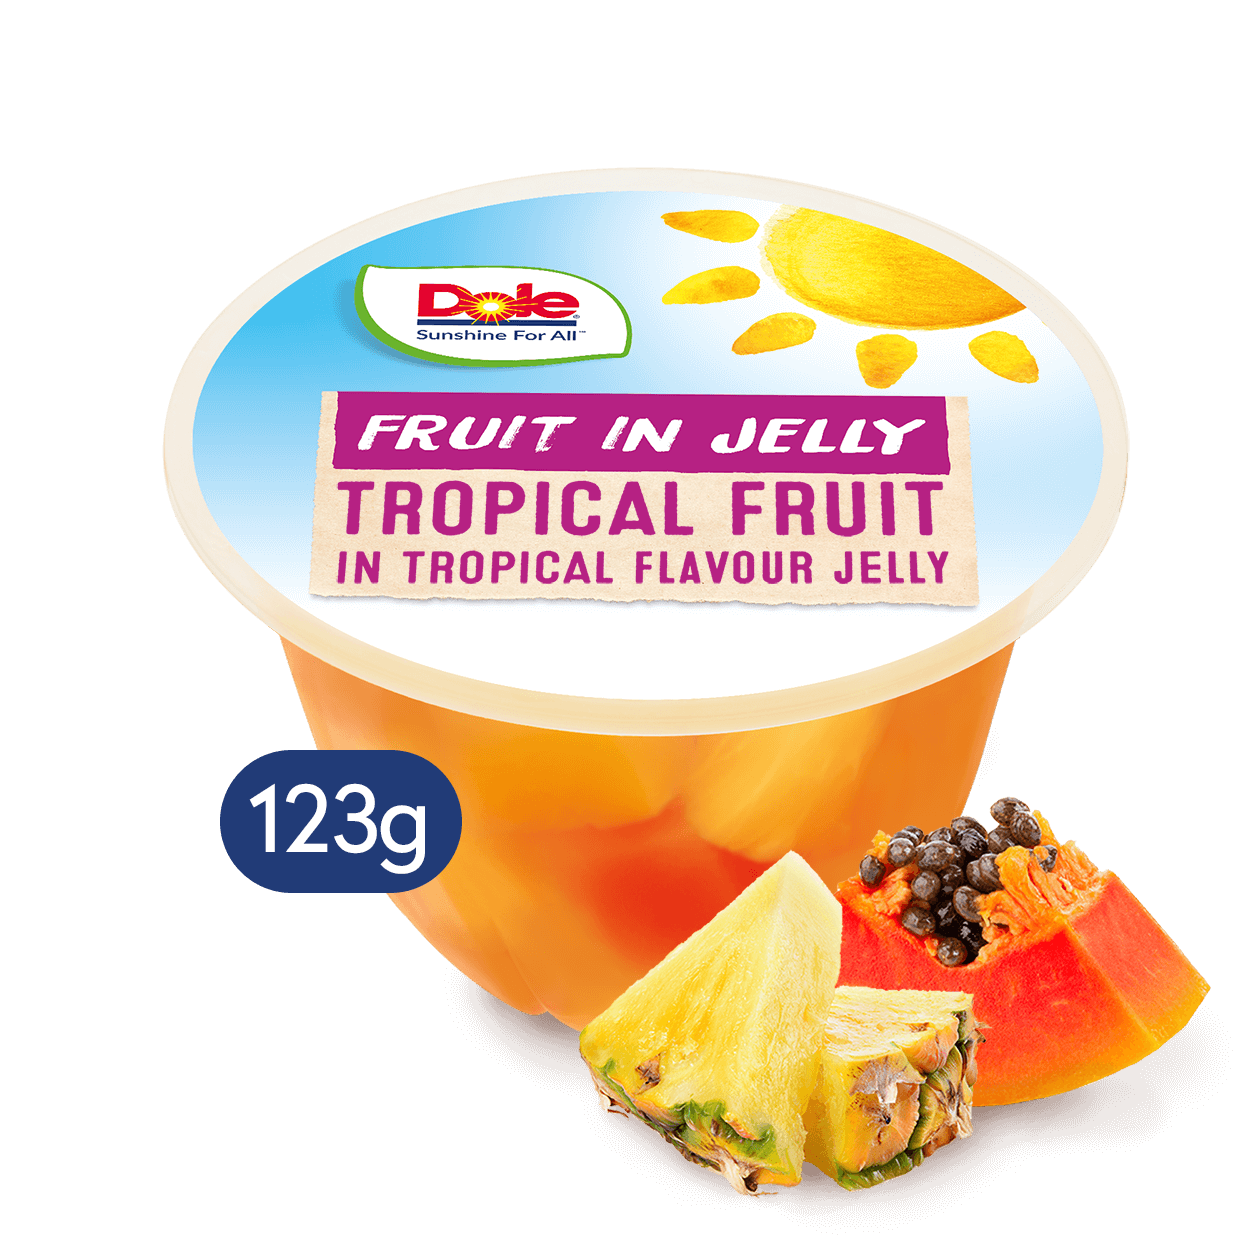 Dole Tropical Fruit in Tropical Jelly Fruit Snacks 123g - Dole® Sunshine